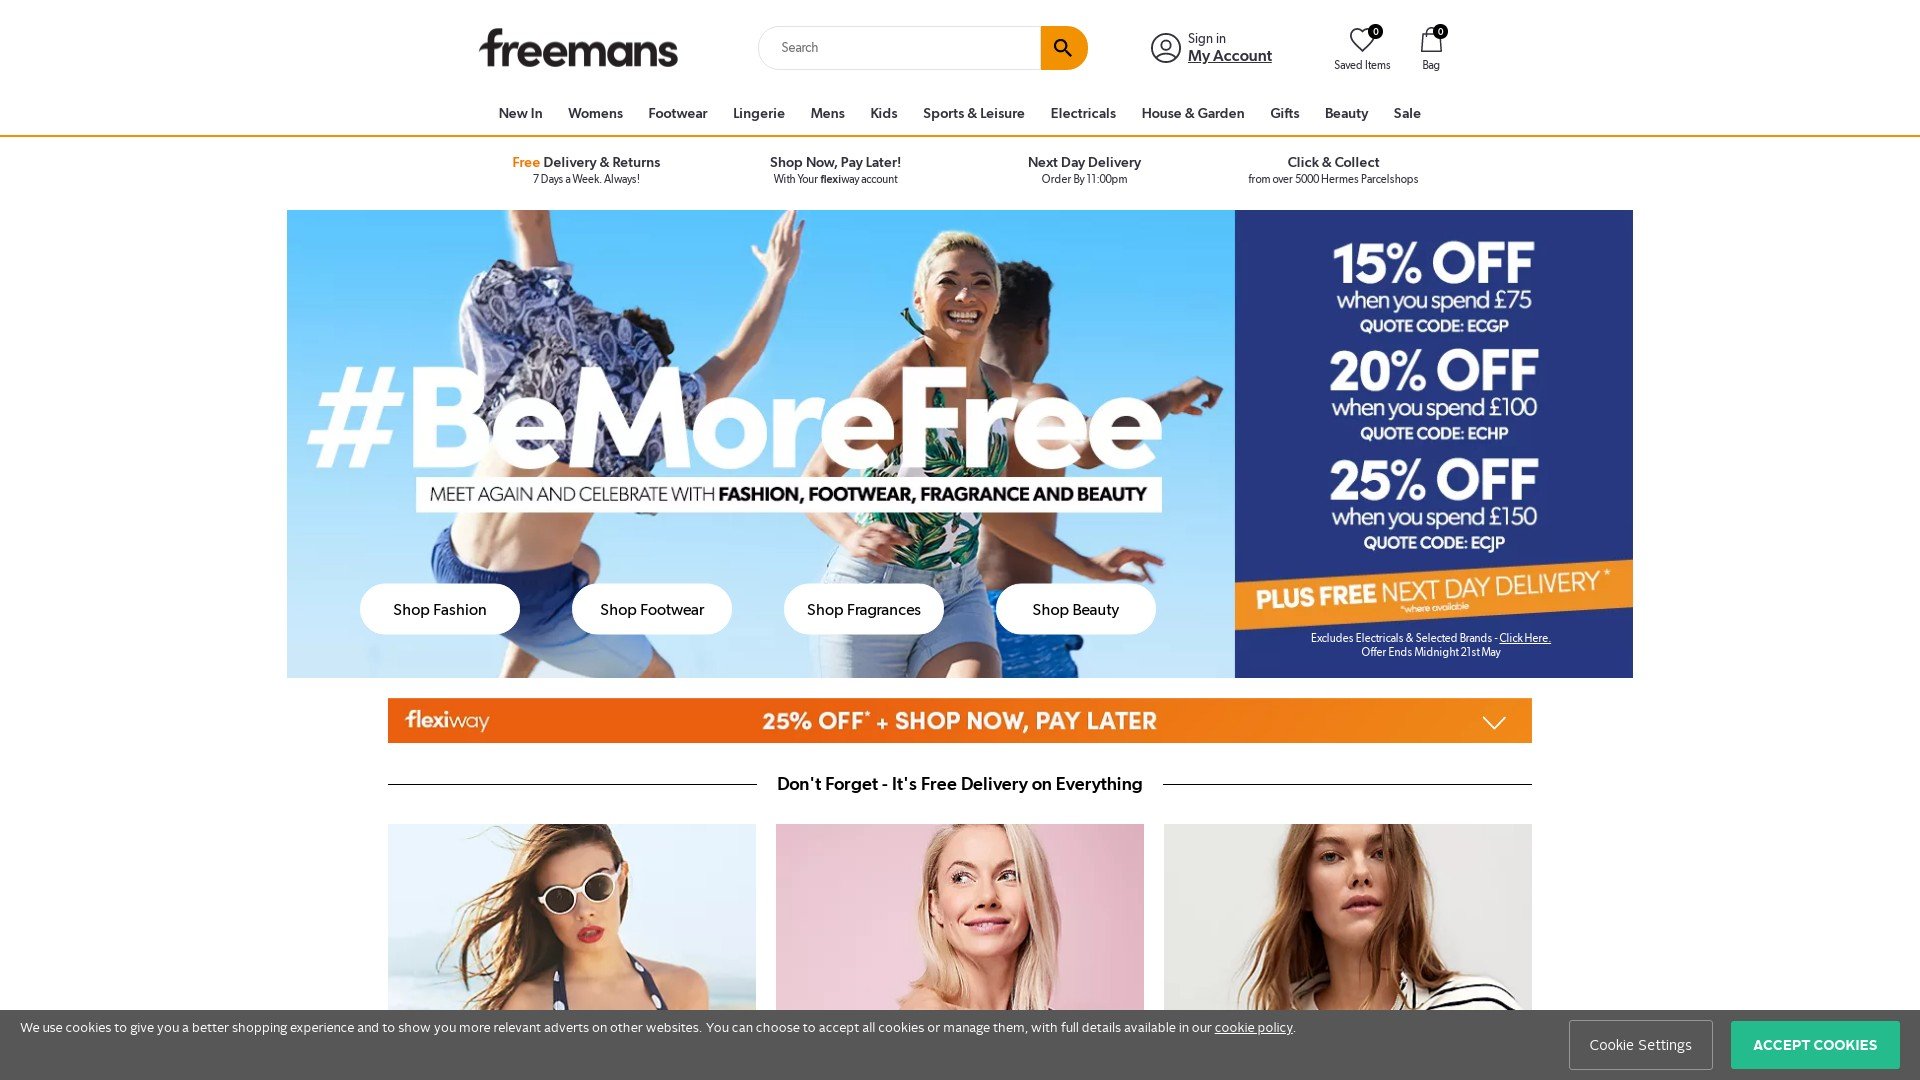  Freemans Online Store - freemans.com